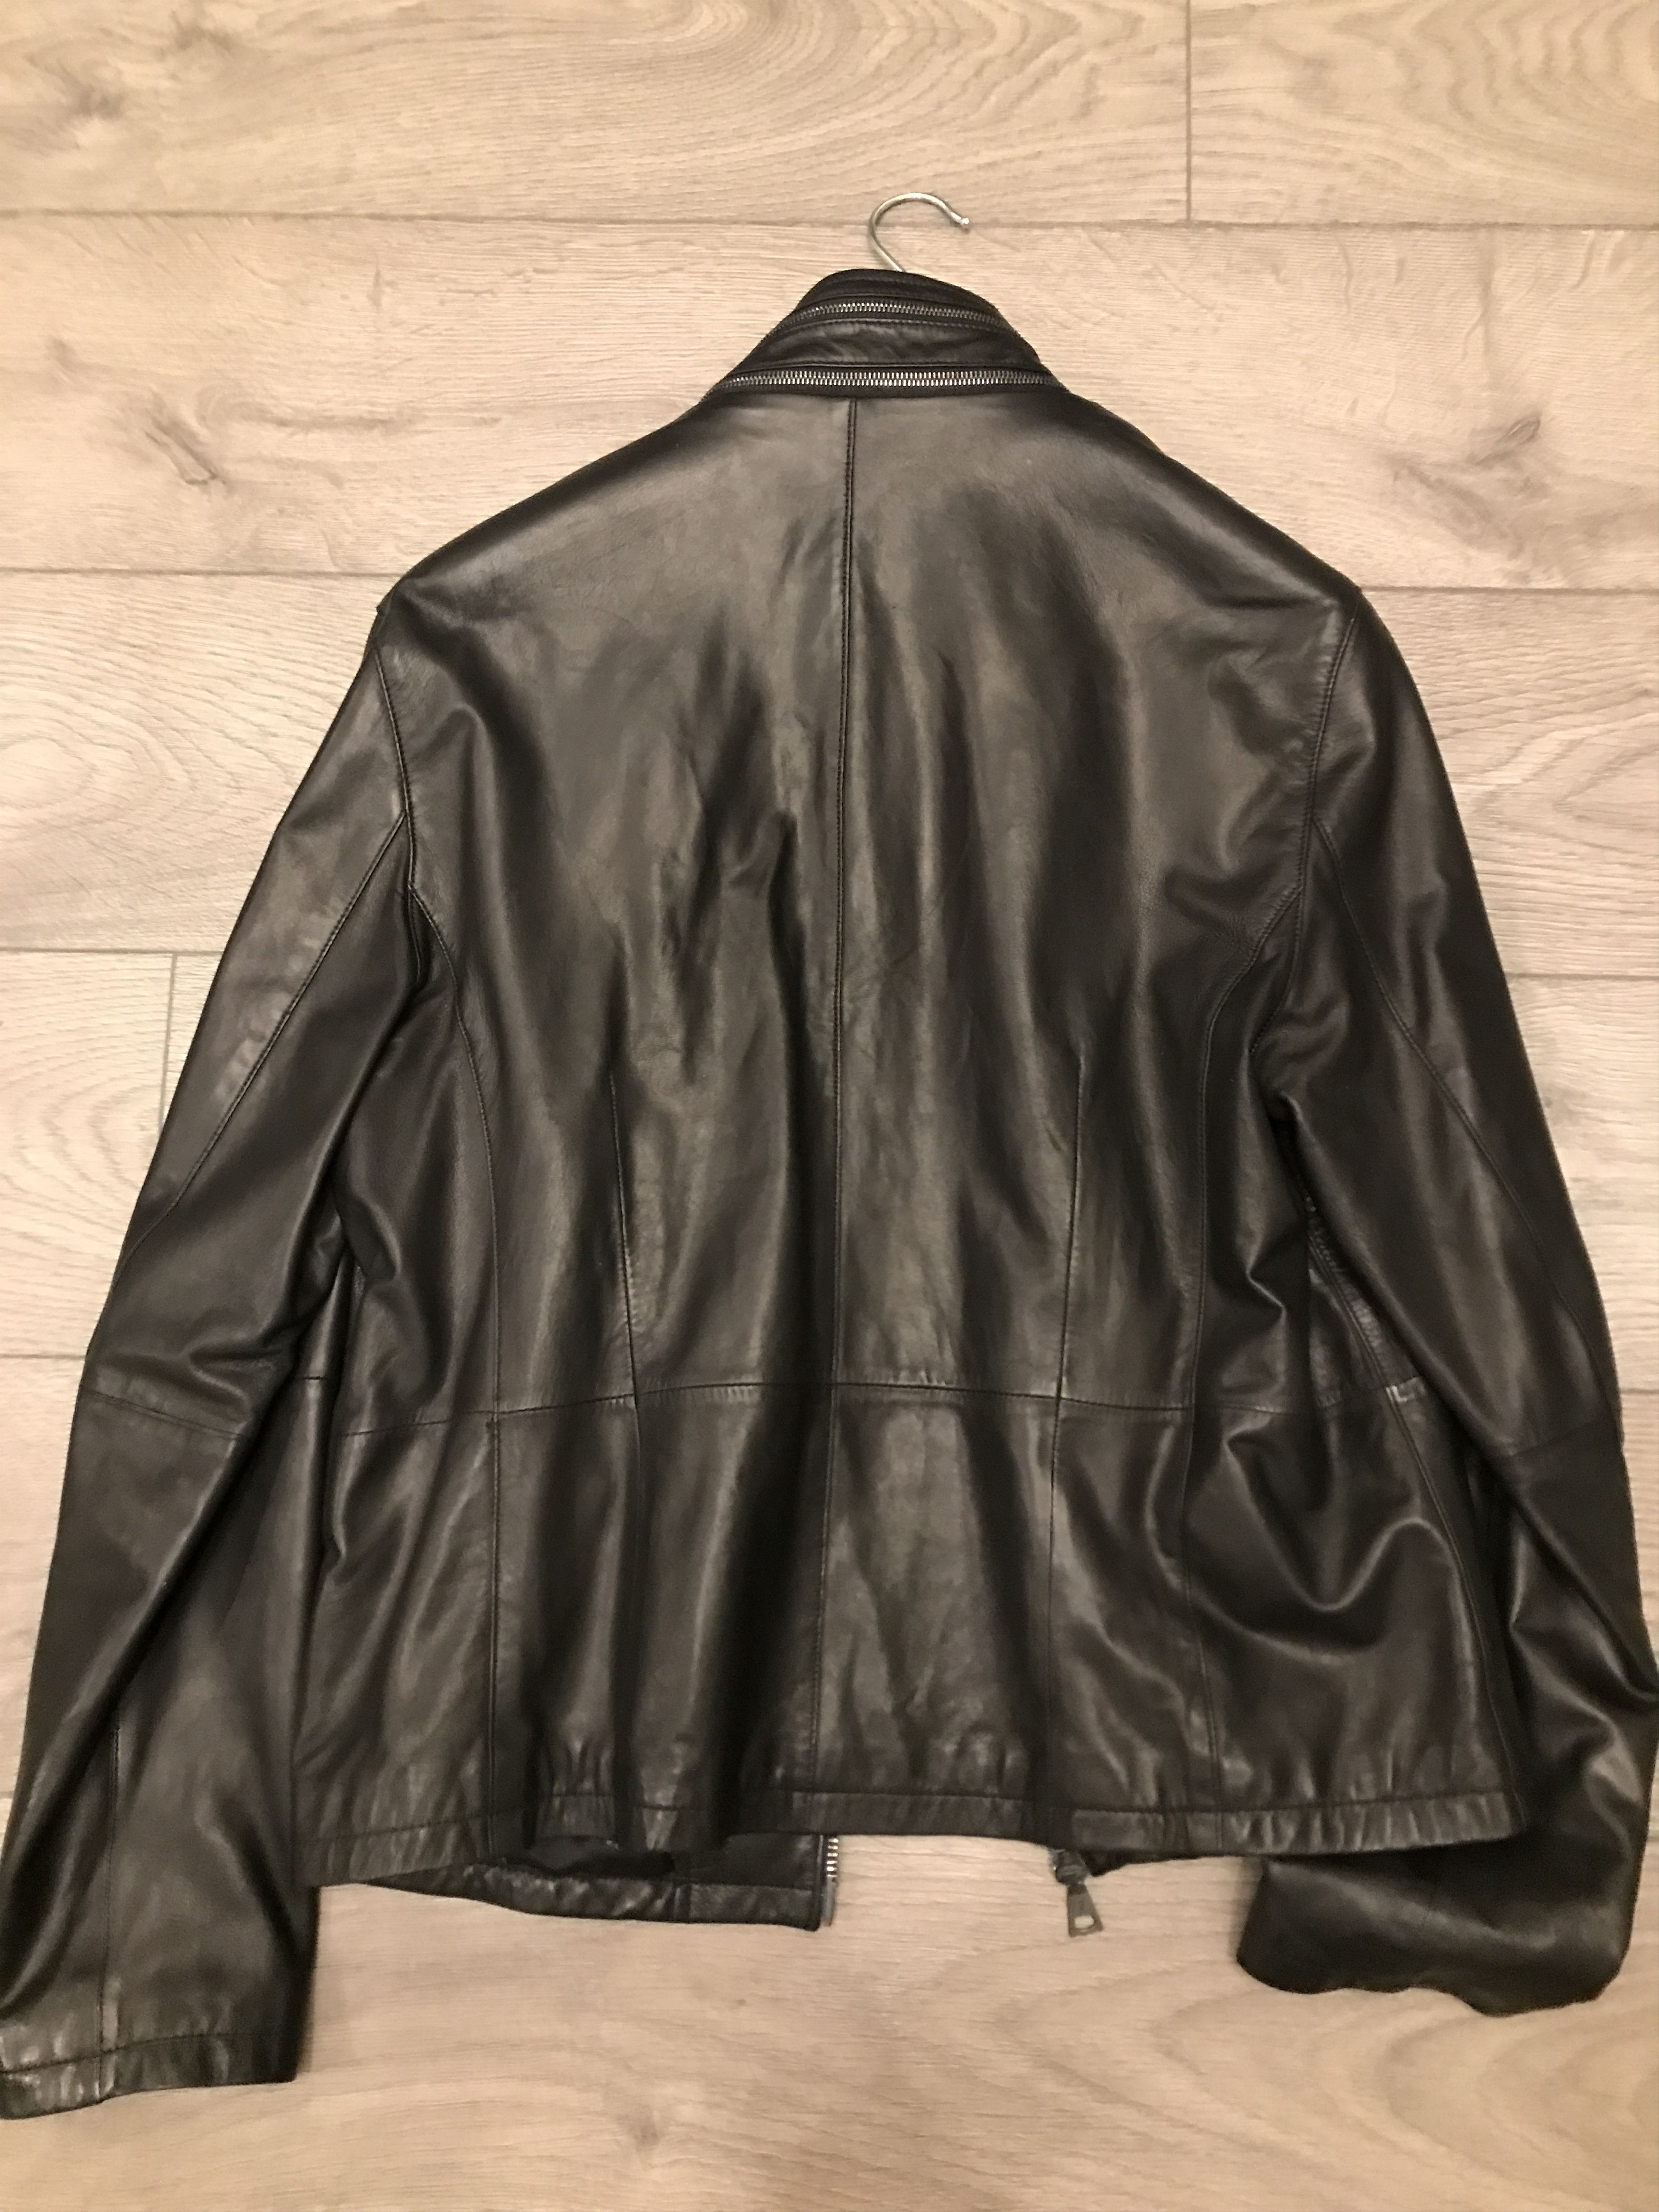 John Varvatos Leather Jacket Size US L / EU 52-54 / 3 - 3 Preview